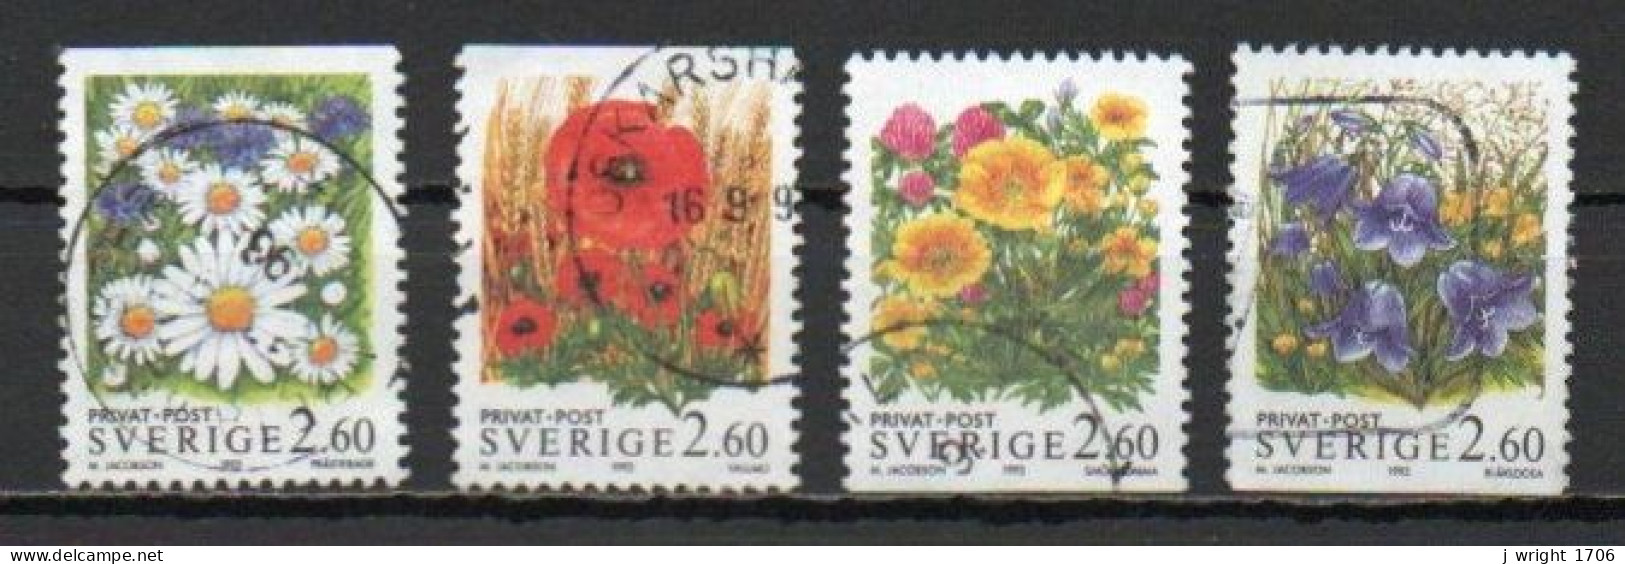 Sweden, 1993, Rebate Stamps/Flowers, Set, USED - Gebraucht